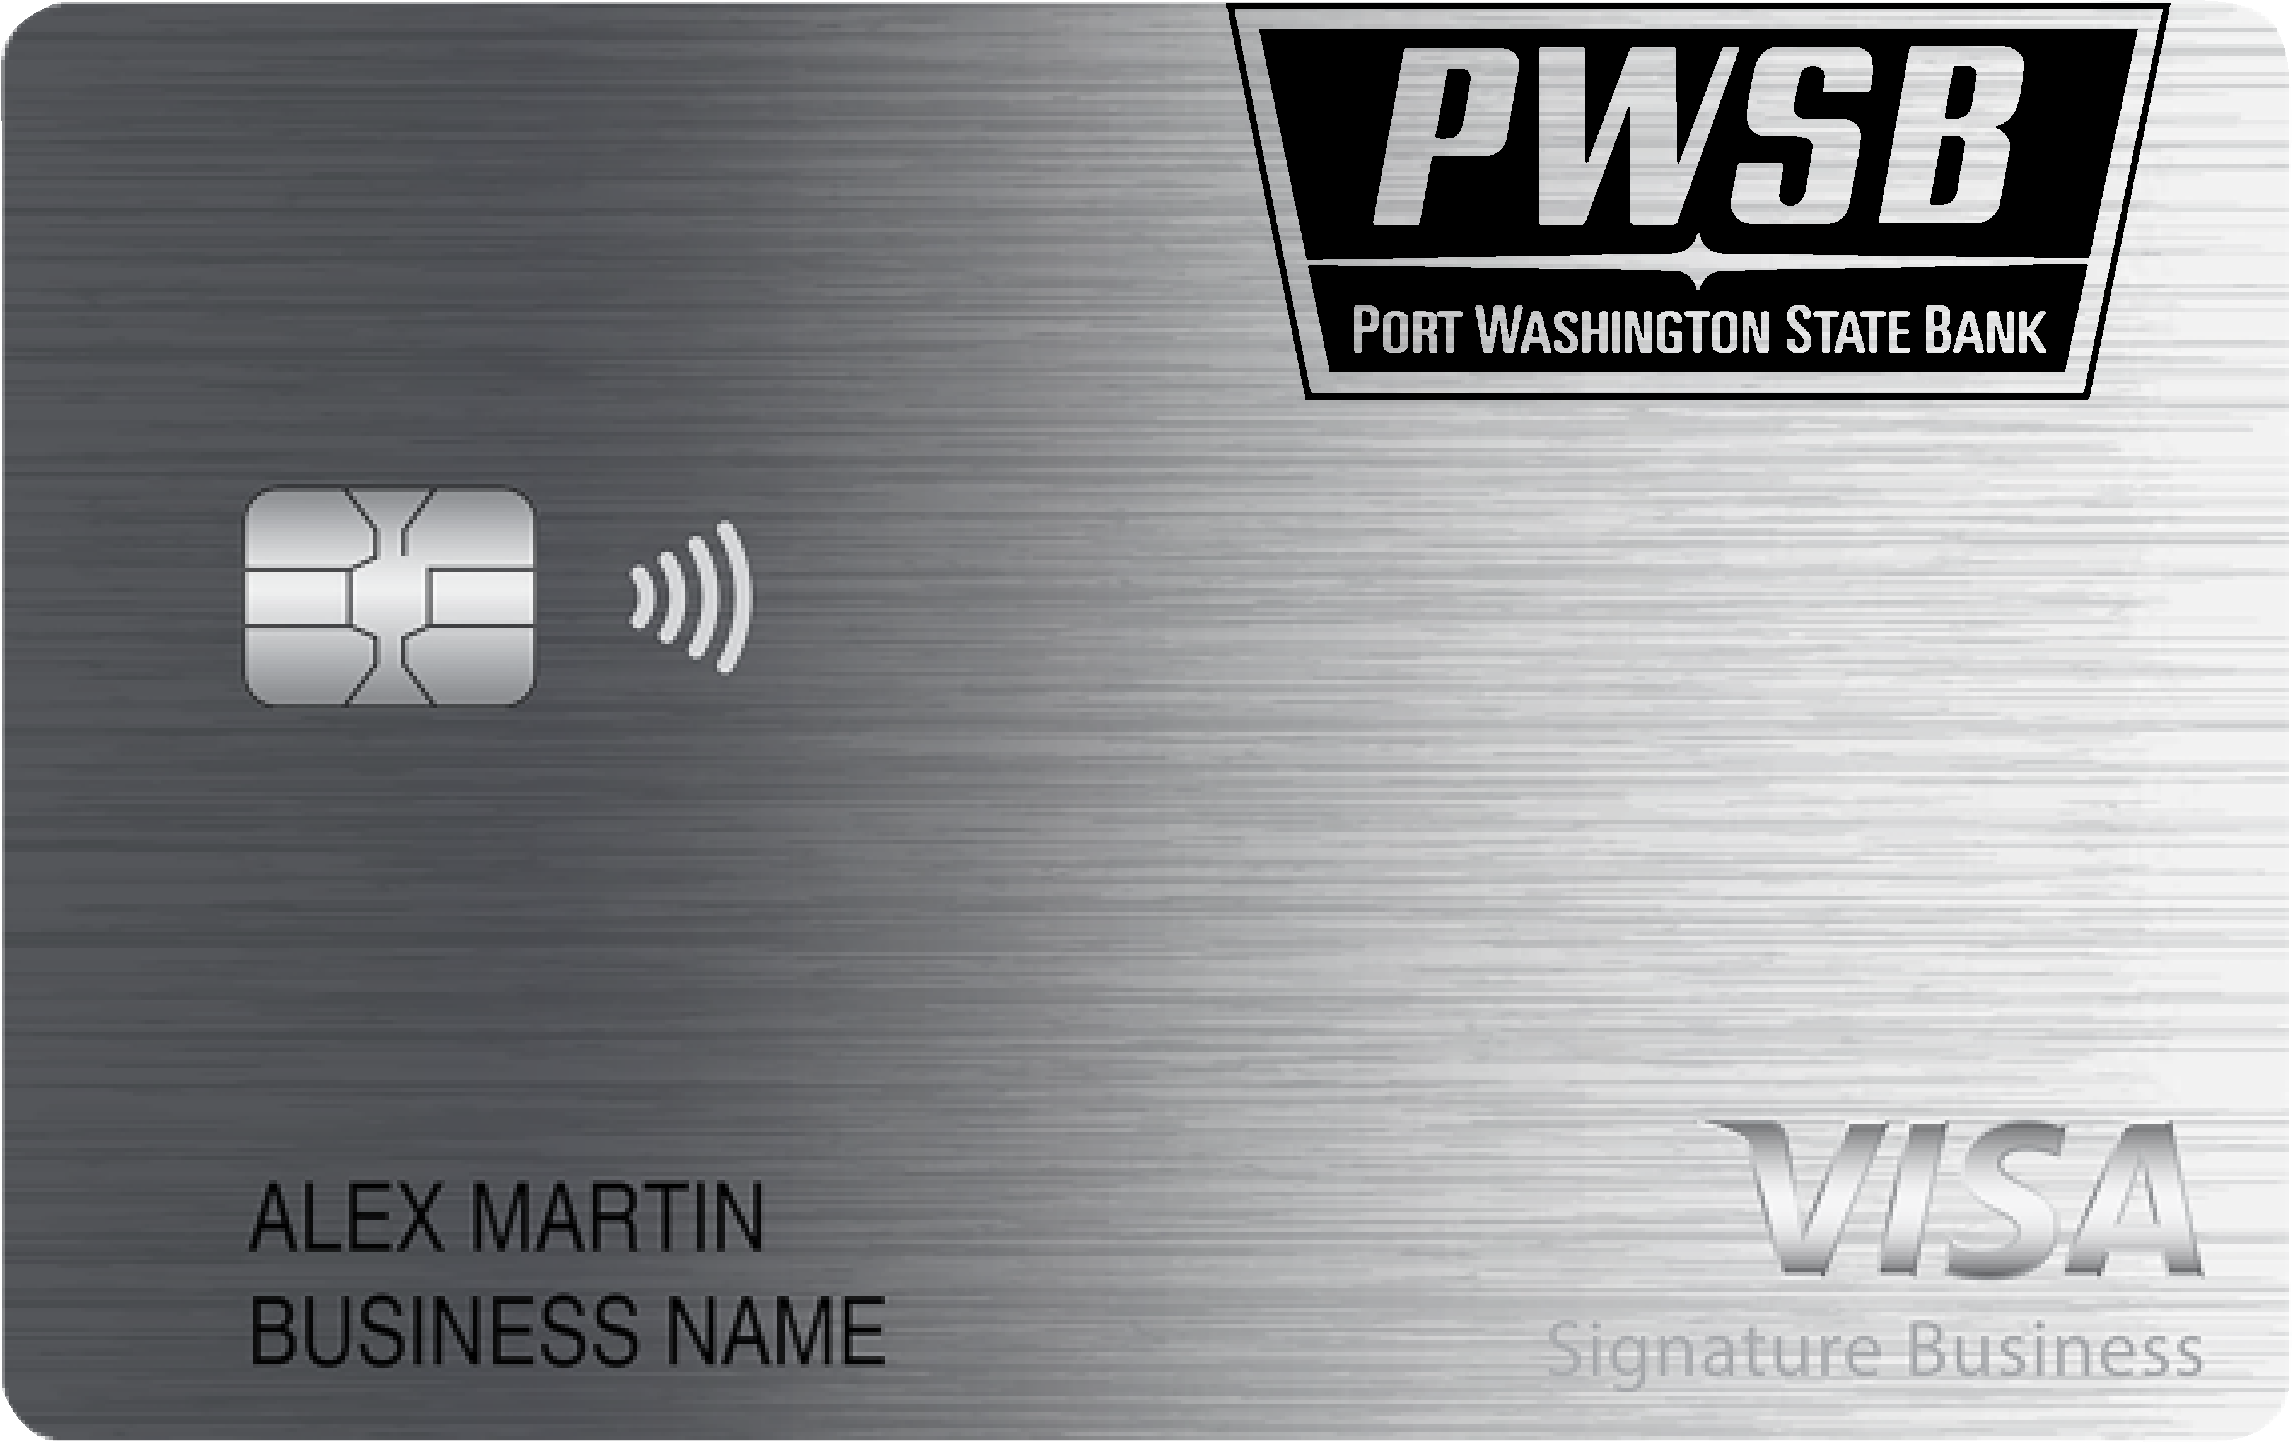 Port Washington State Bank Smart Business Rewards Card